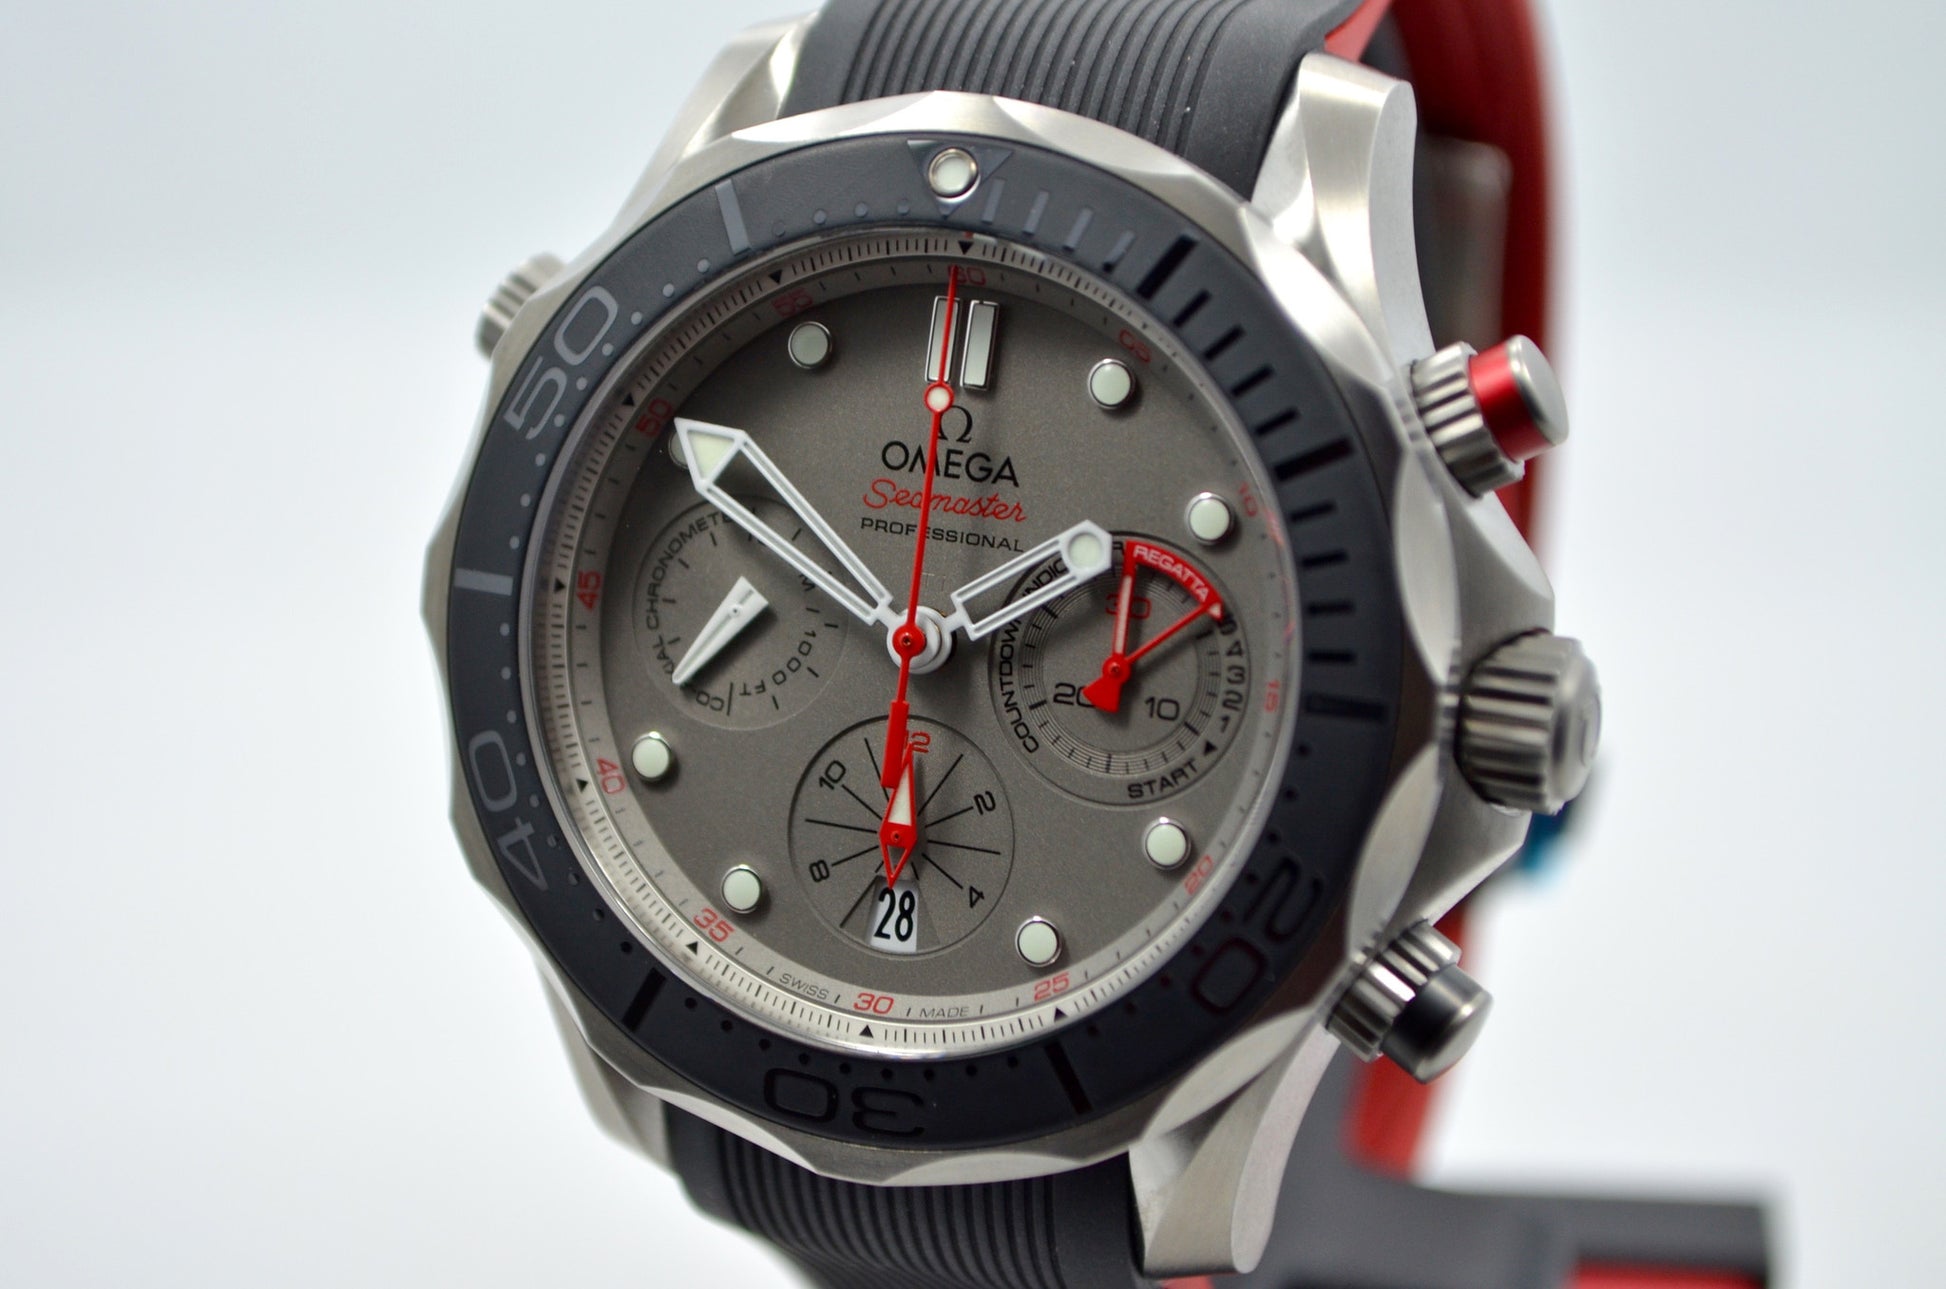 Omega Seamaster Professional ENTZ 300M Titanium 21292445099001 Chronograph Watch - Hashtag Watch Company